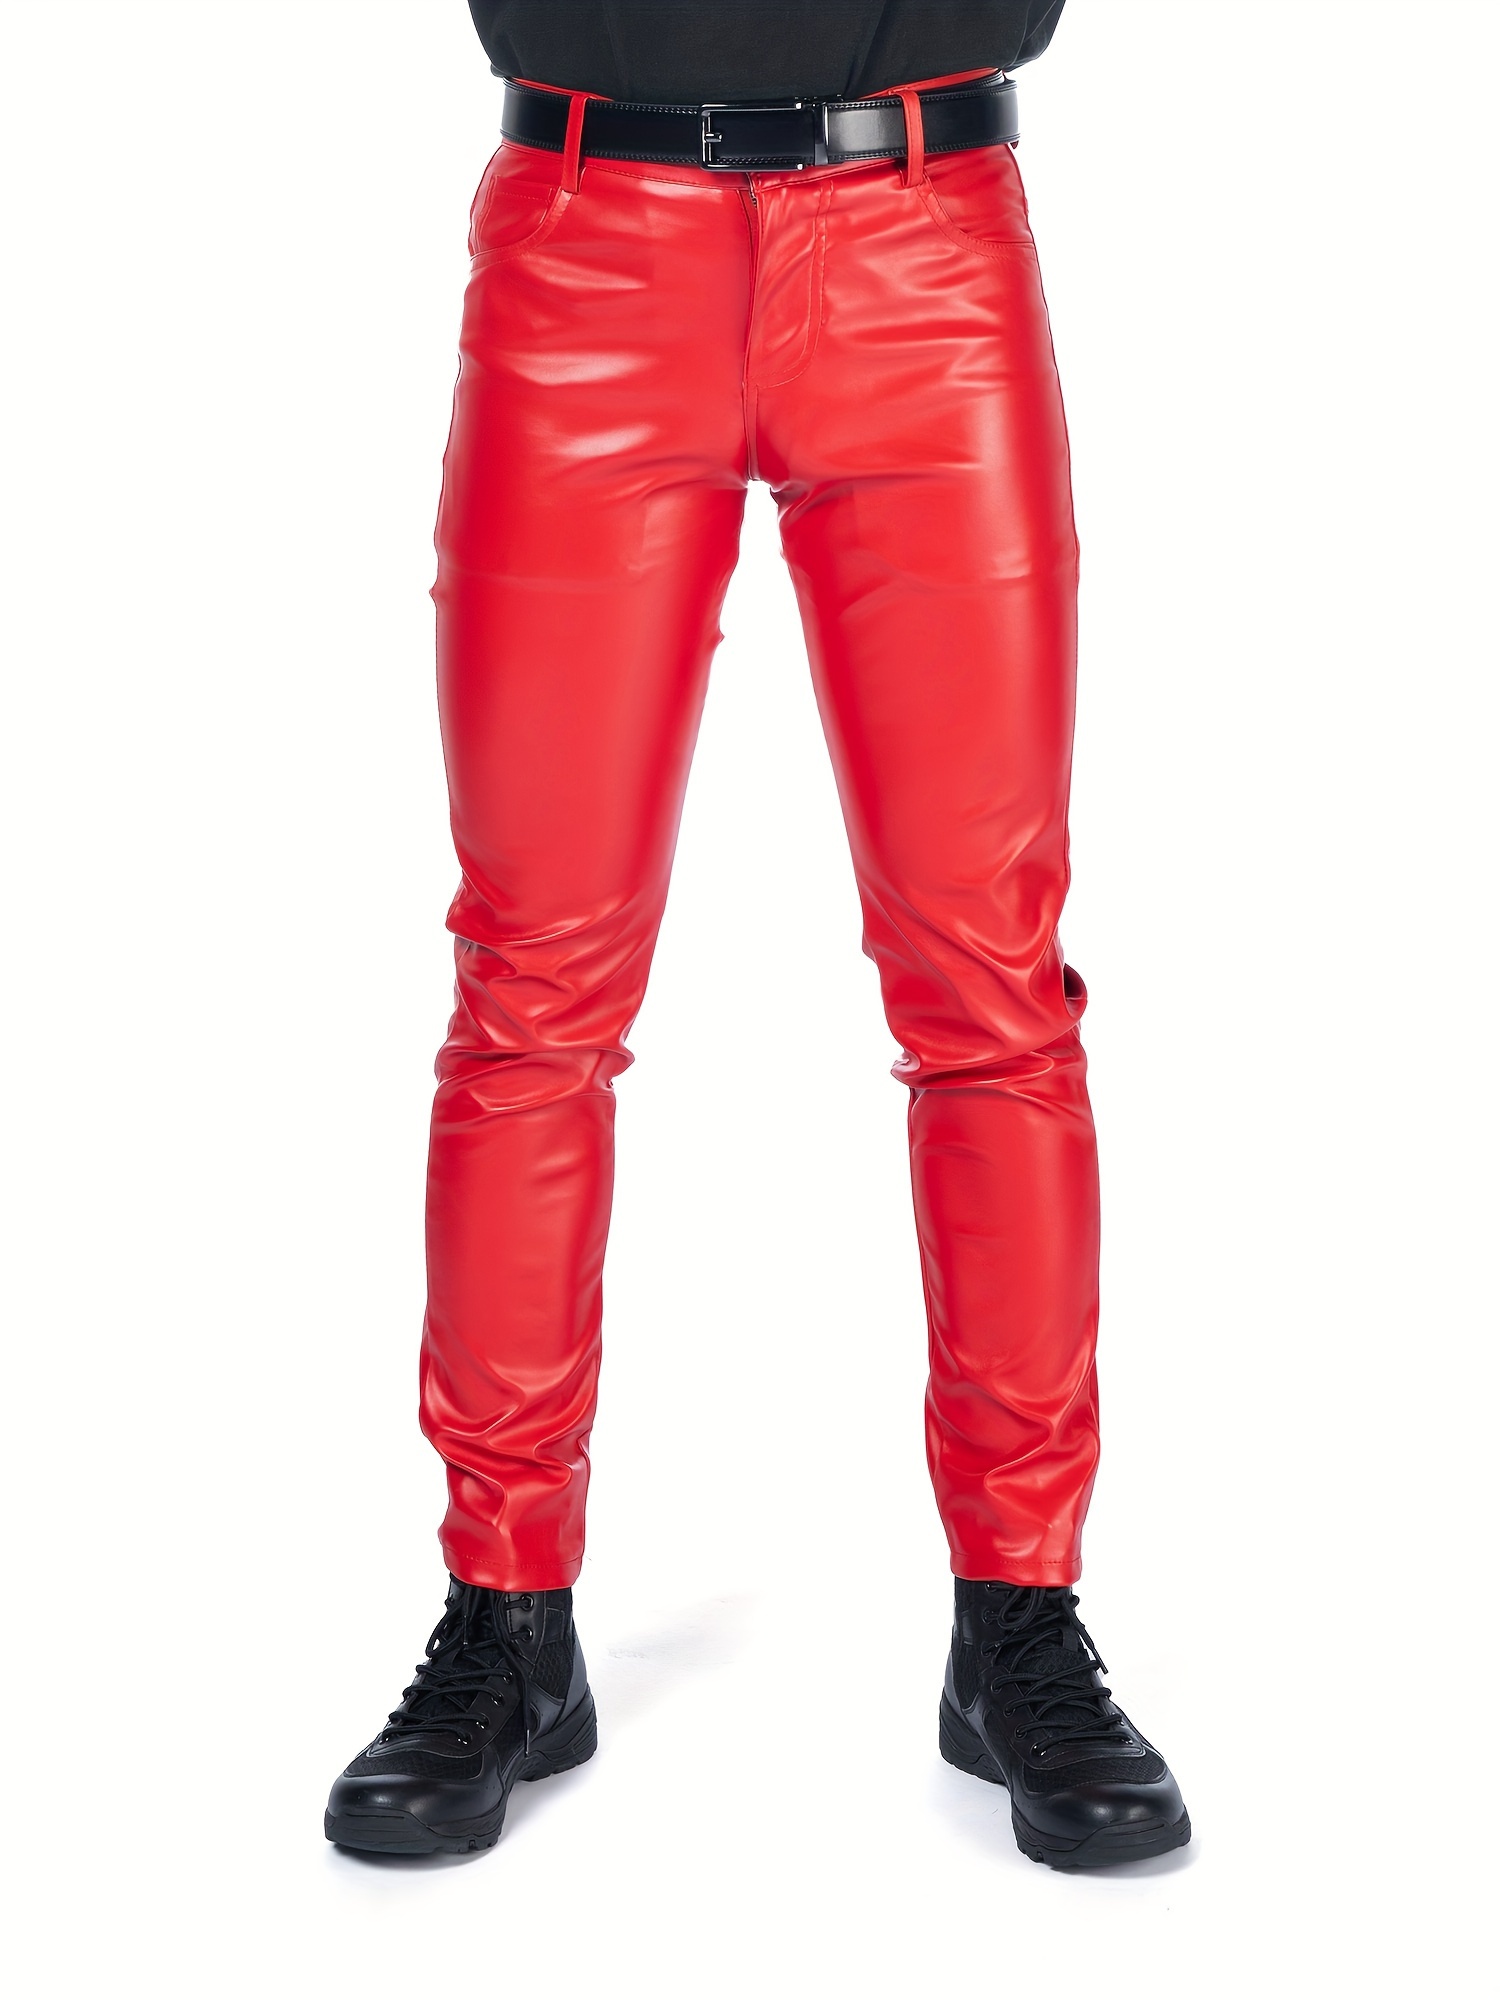 Leather Shiny Pants